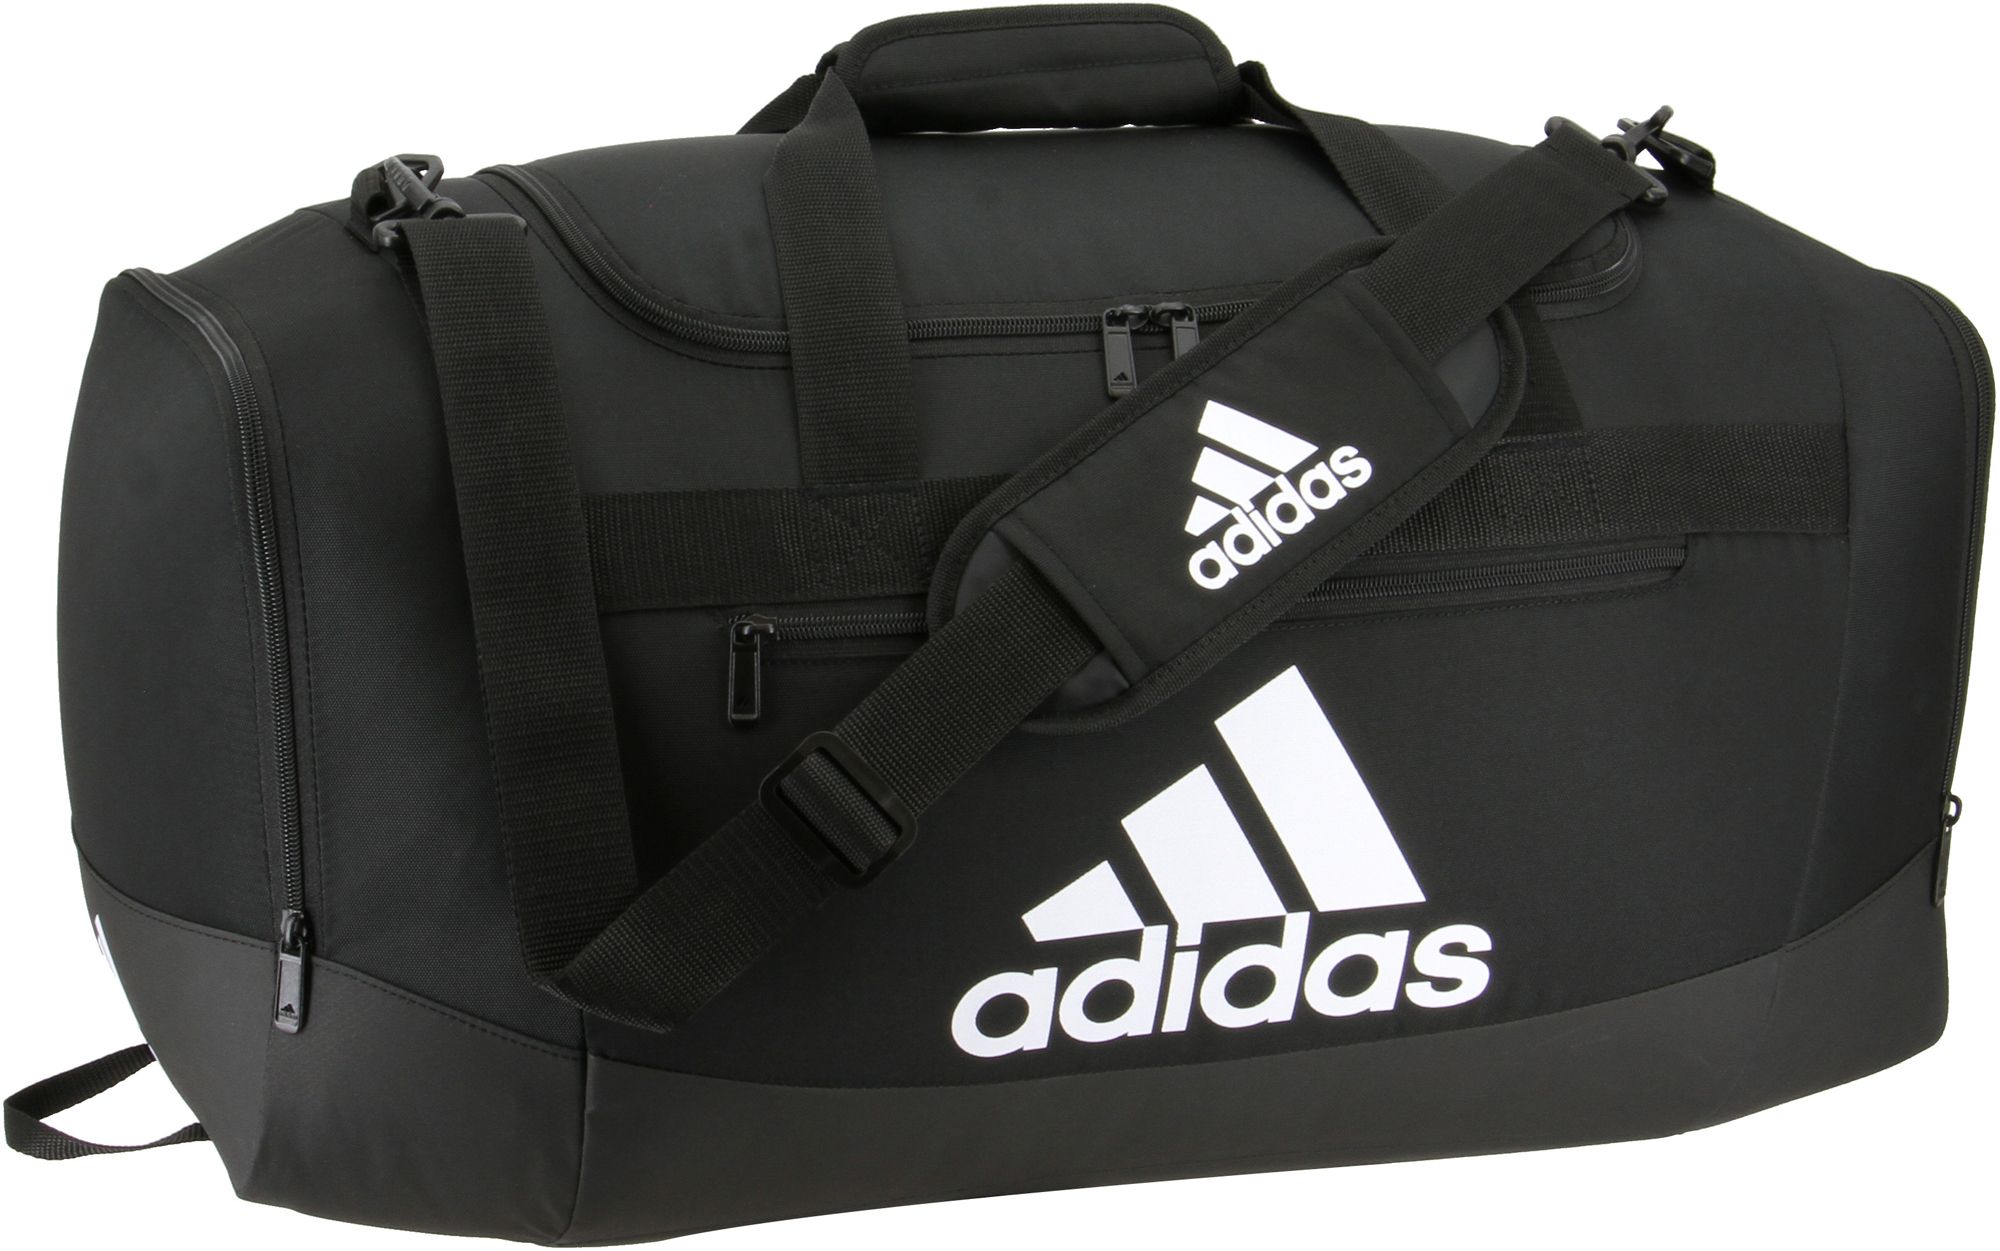 adidas Defender IV Medium Duffel Bag